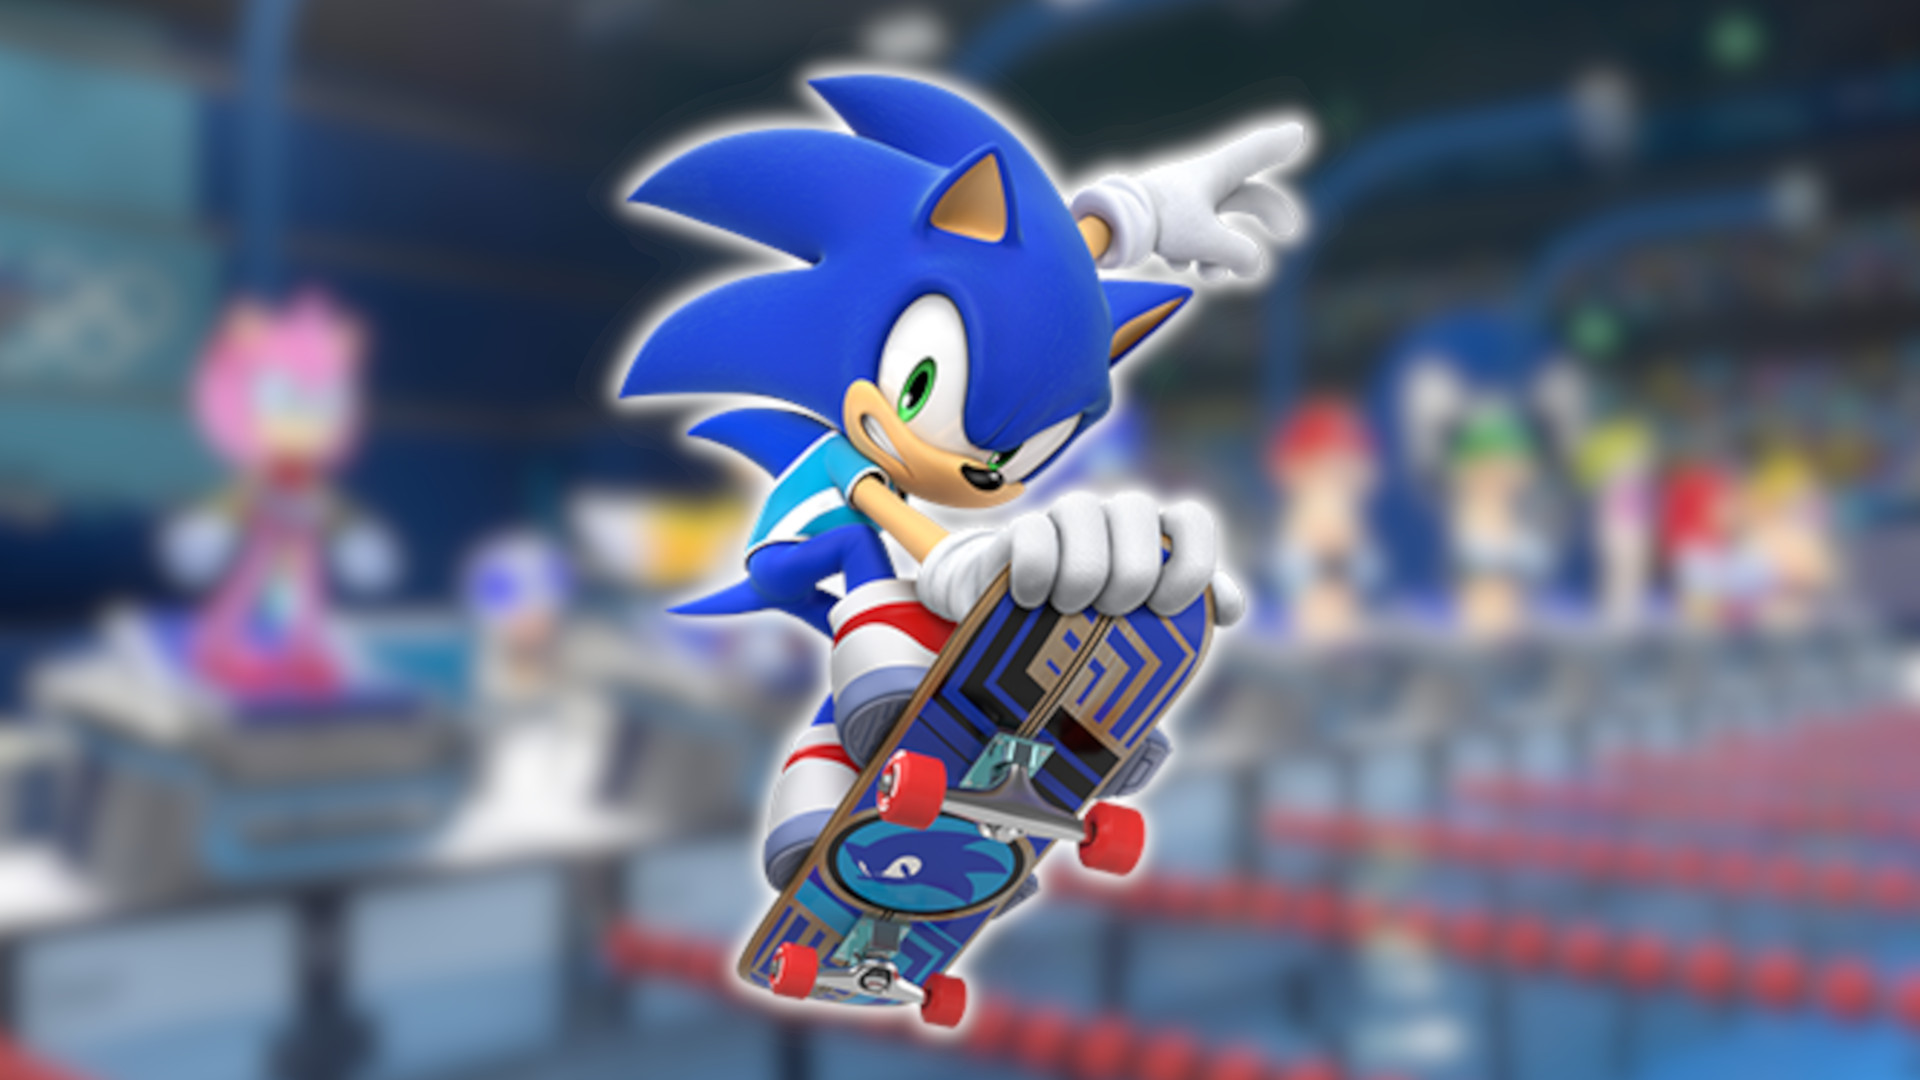 Sonic the Hedgehog's best video games